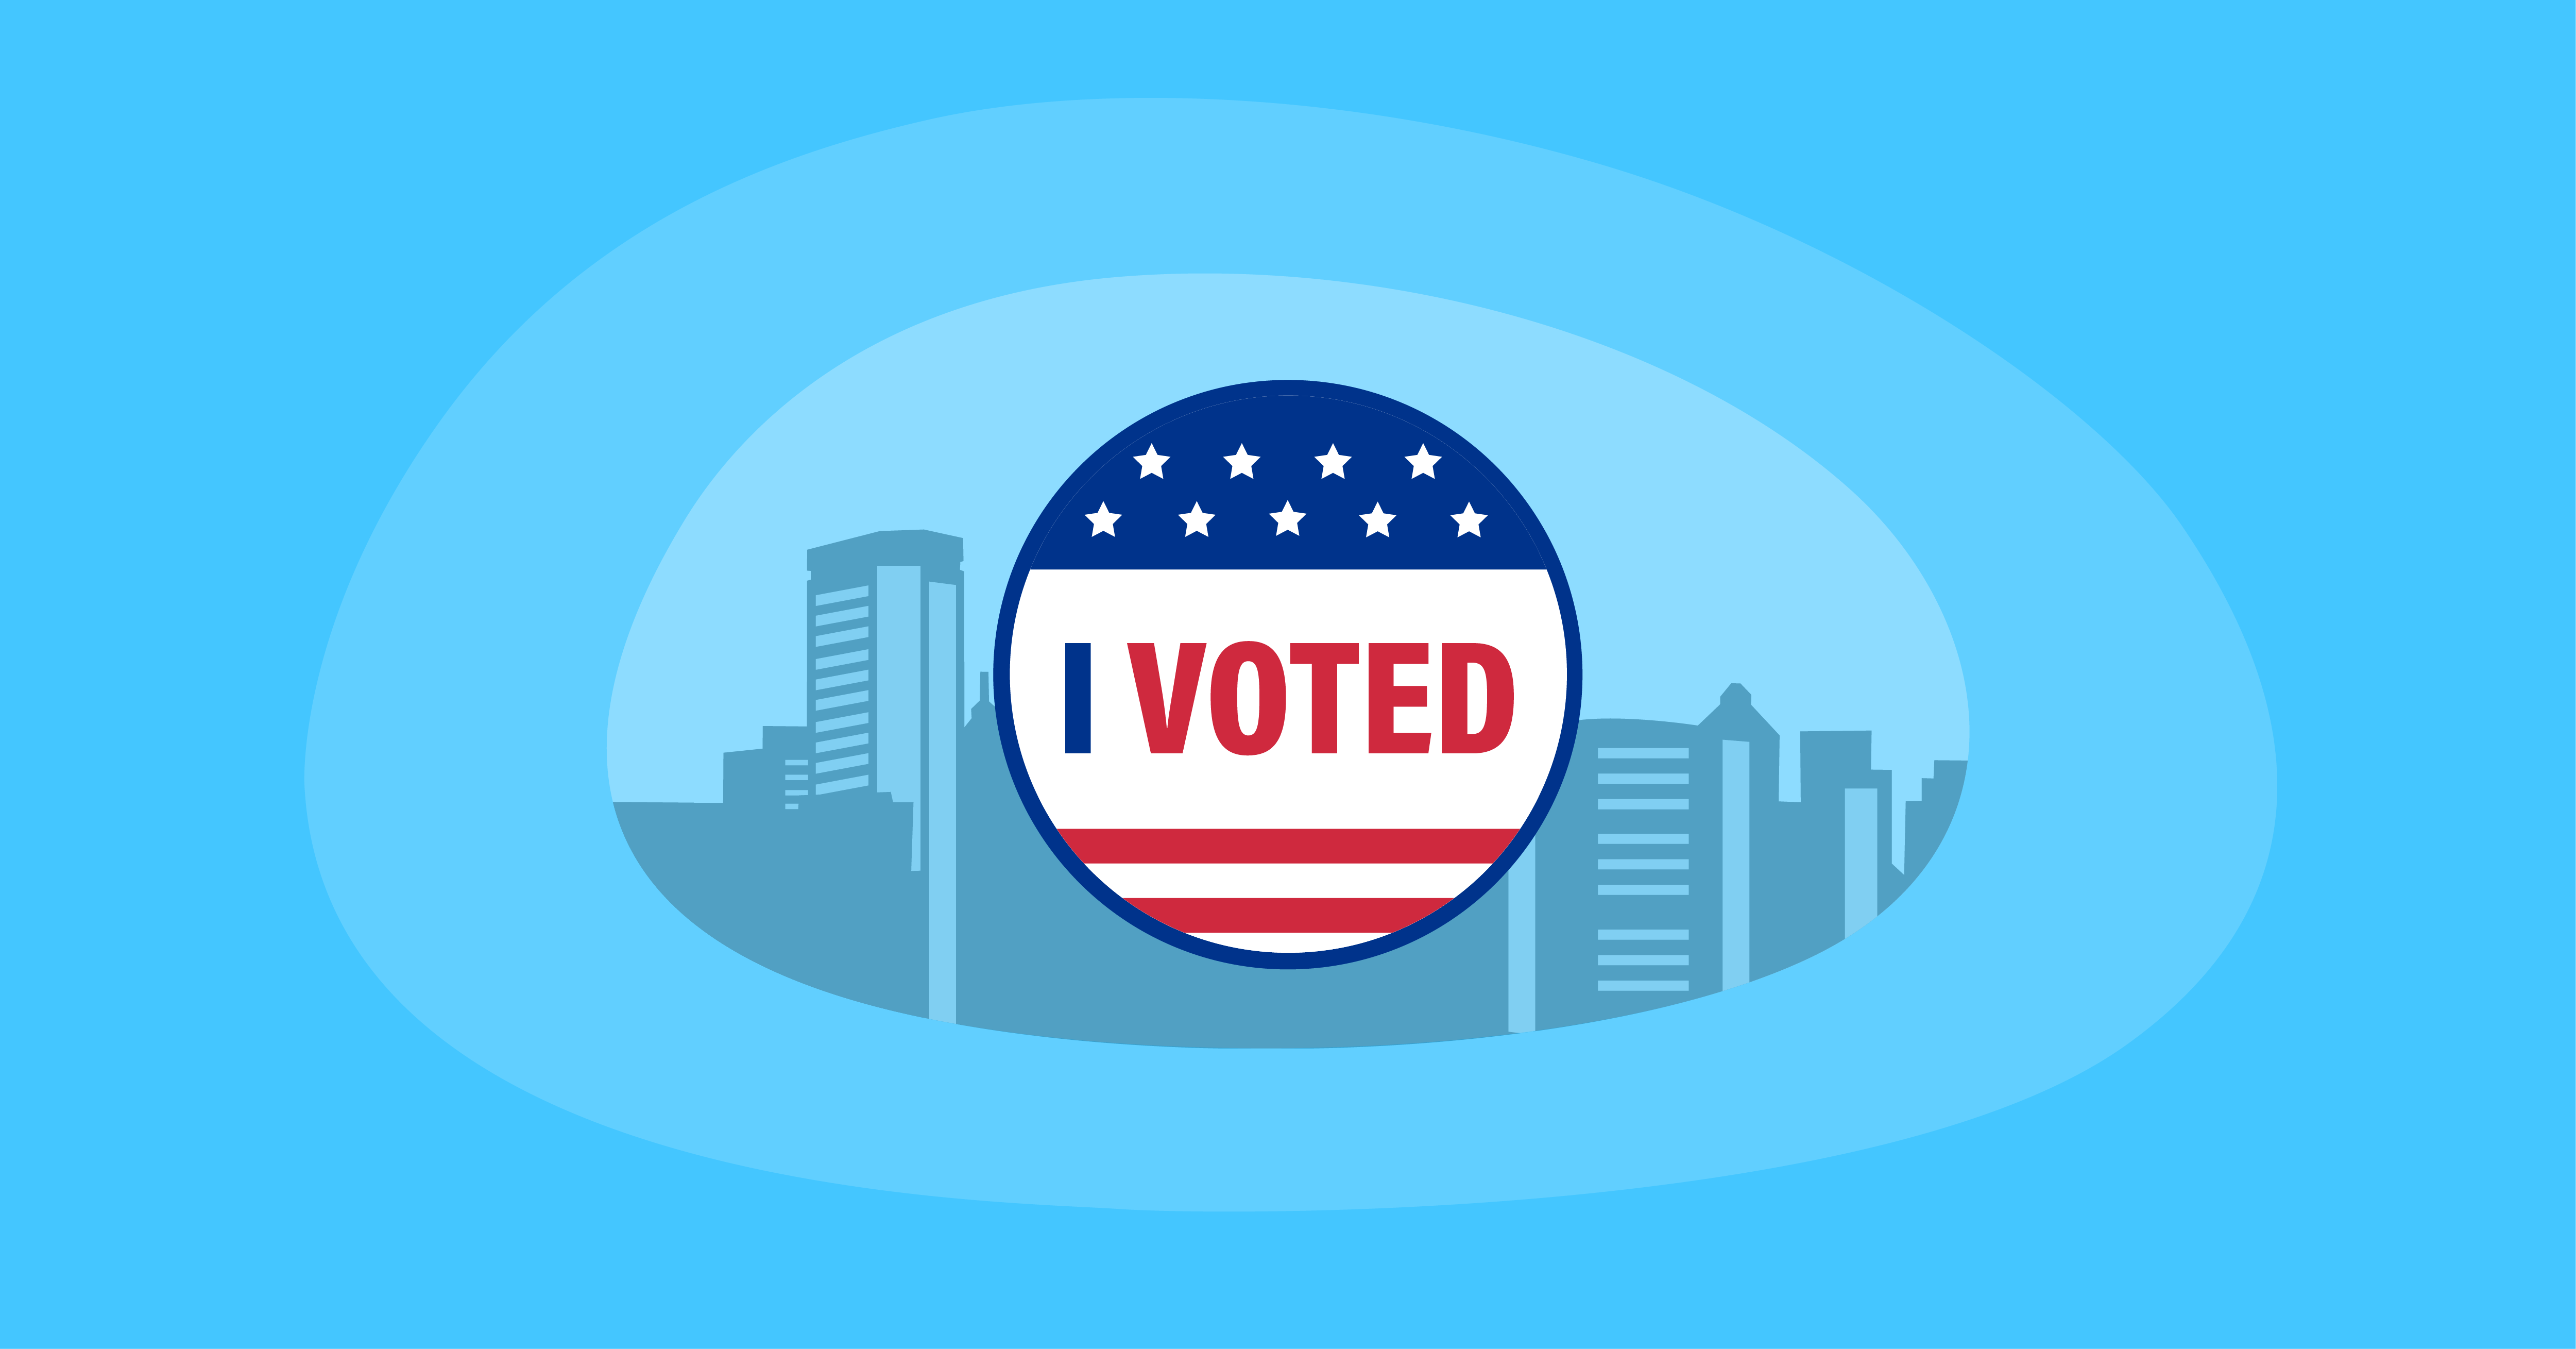 Illustration of an "I voted" badge